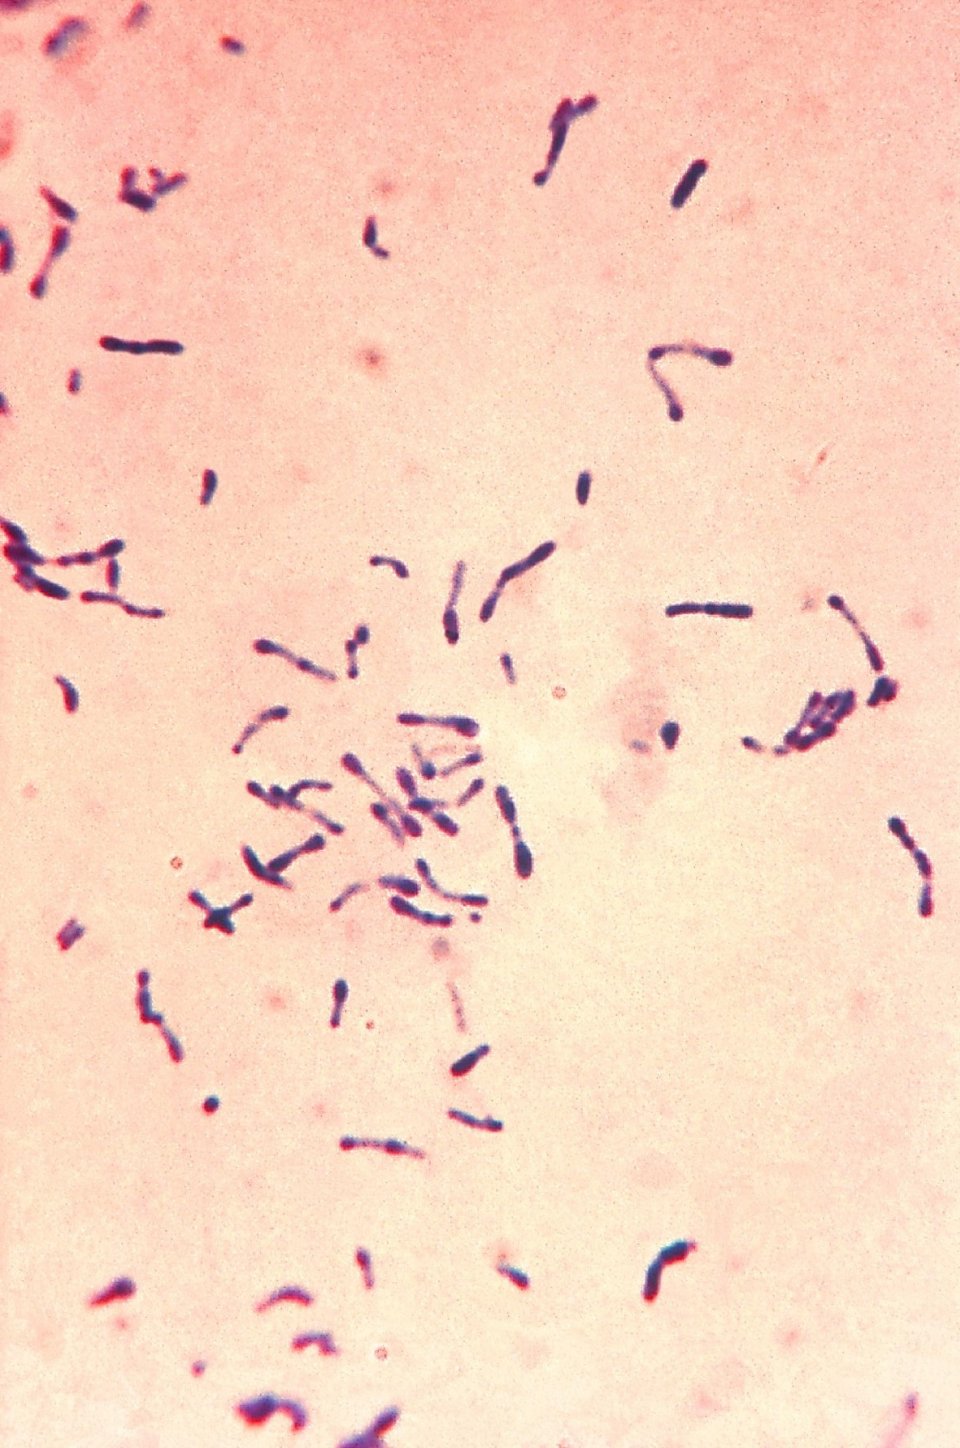 Antibiotic resistance could make diphtheria ‘major global threat’ again ...